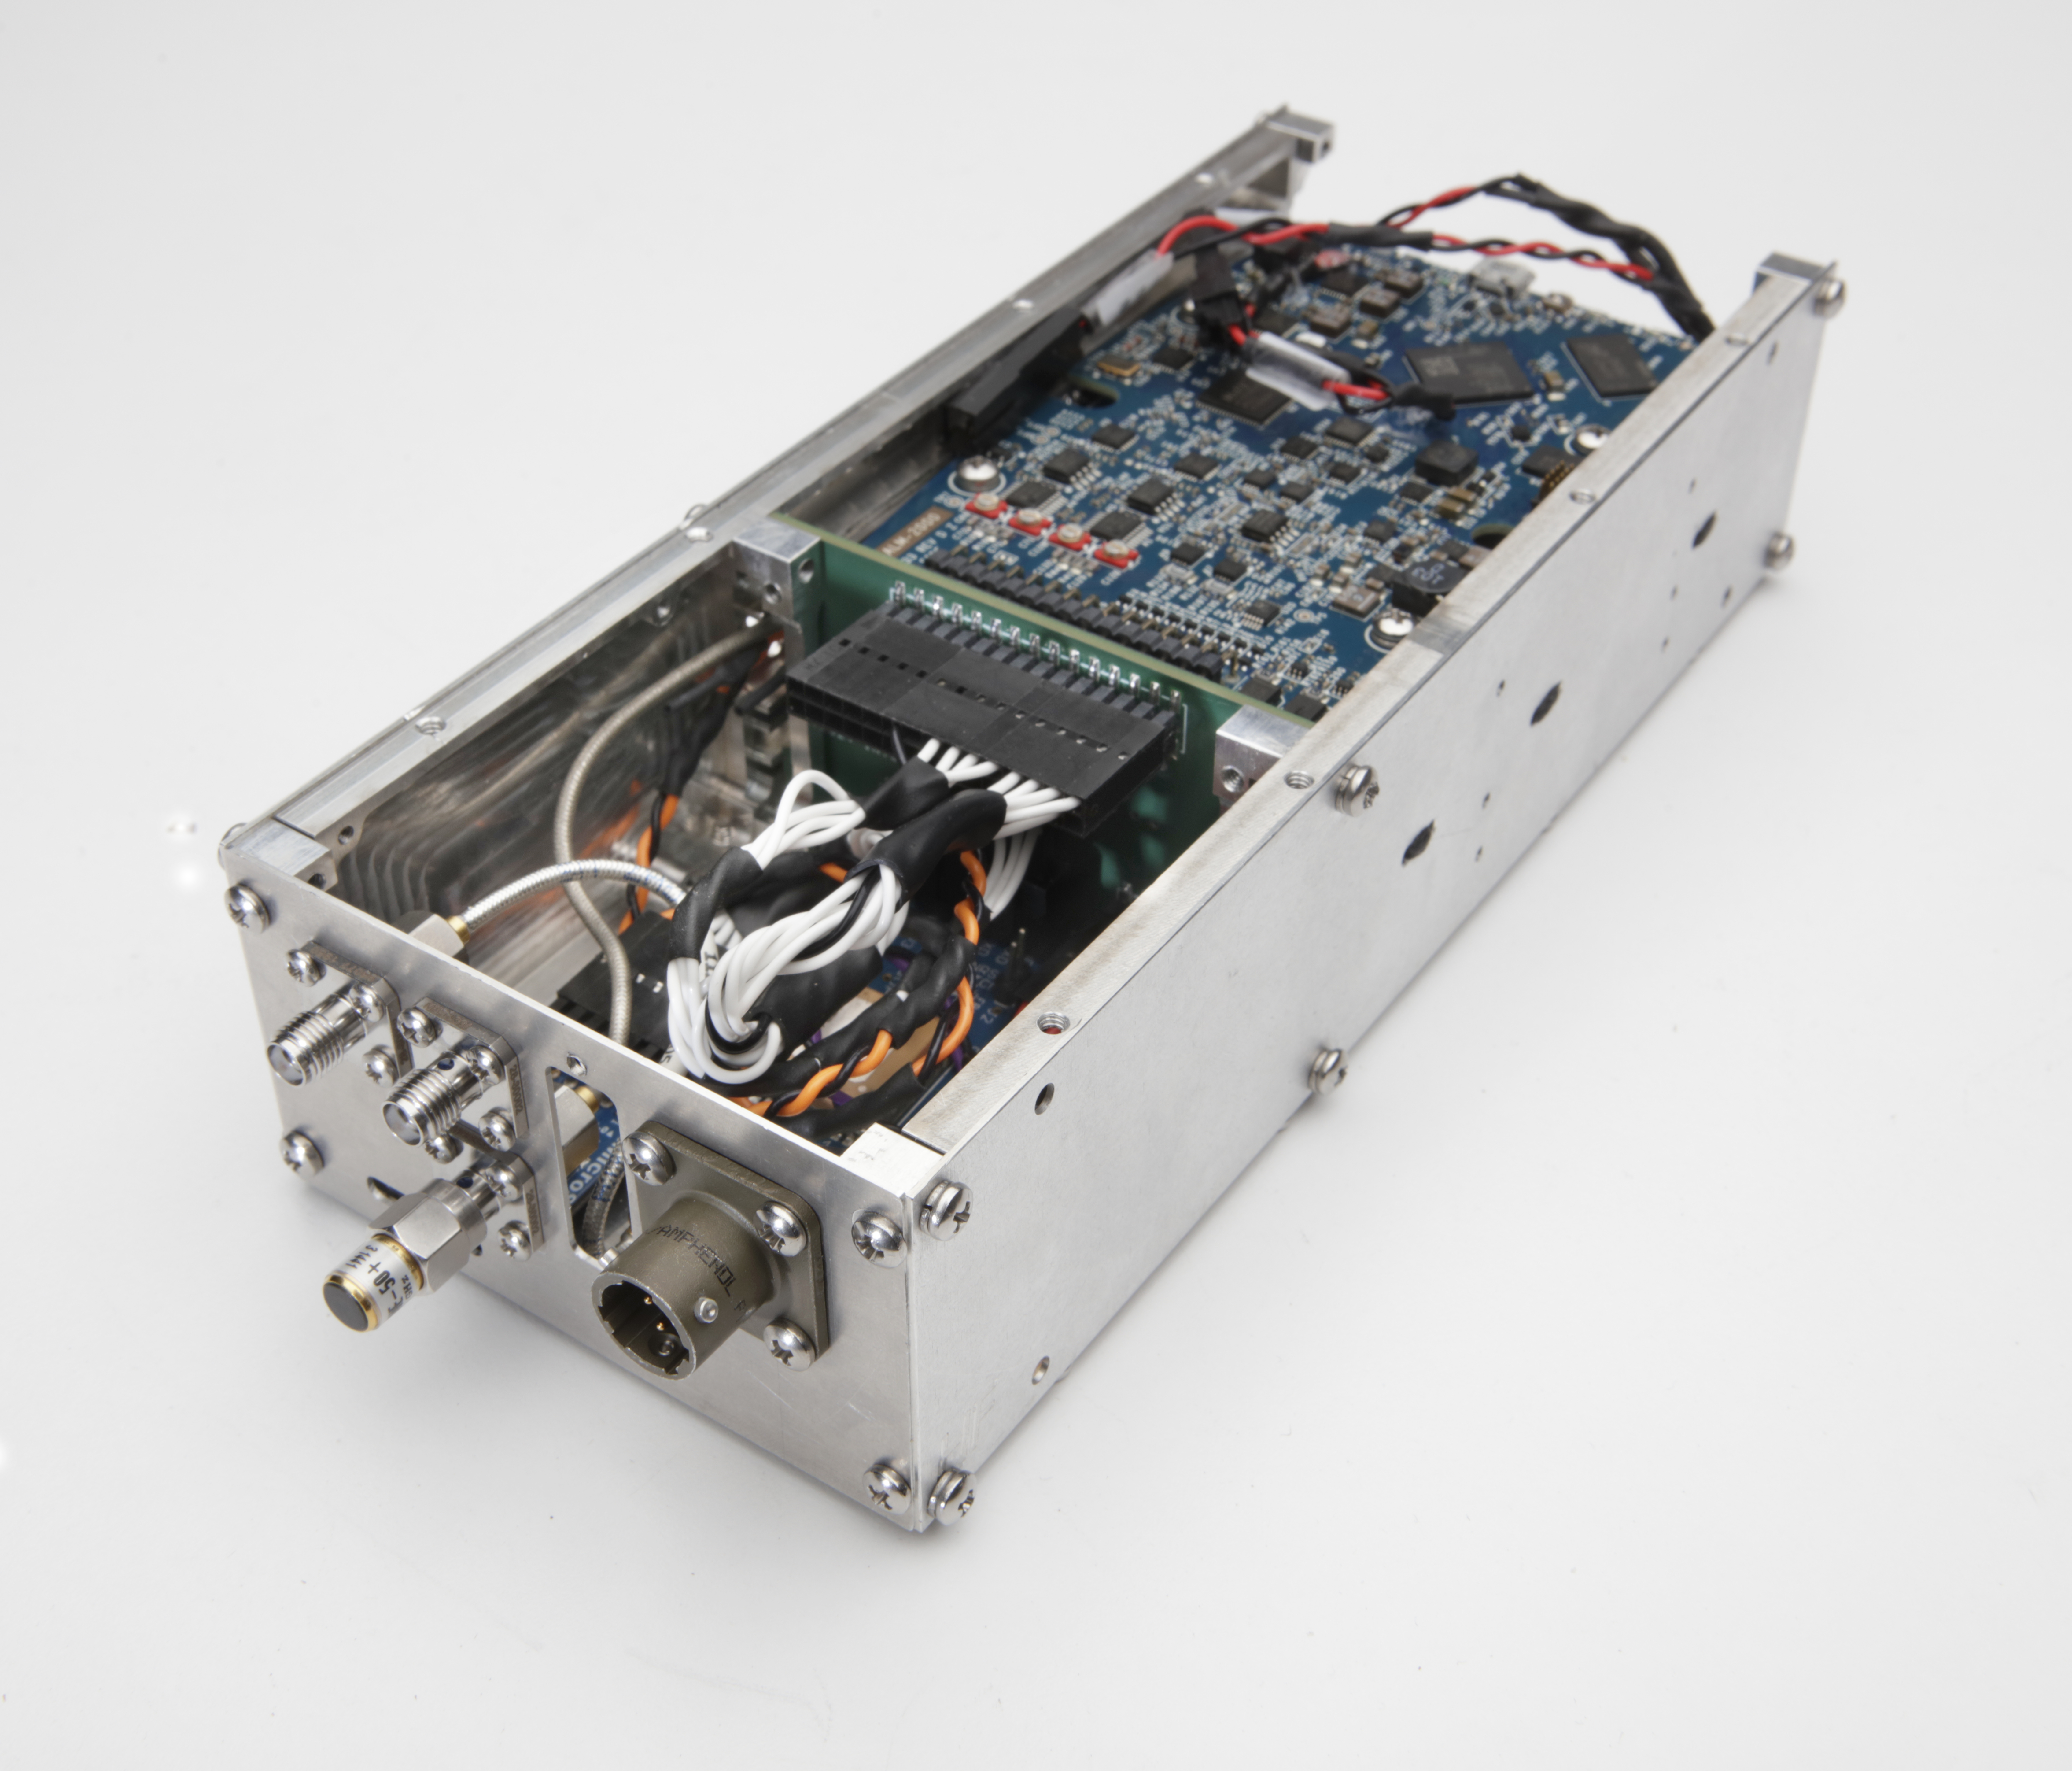 The HF sounder box